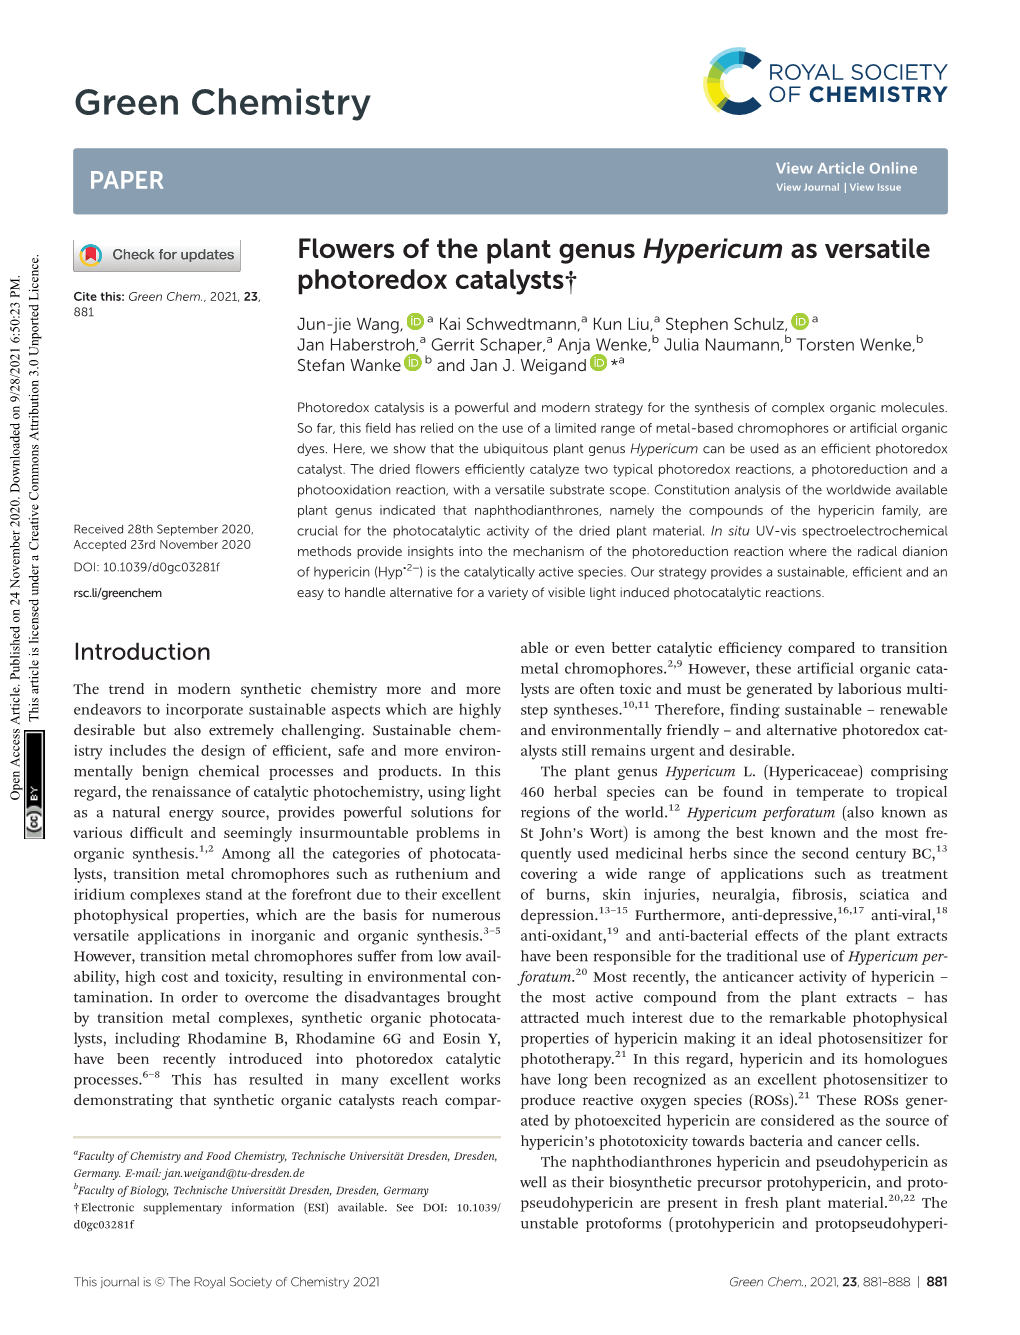 Flowers of the Plant Genus Hypericum As Versatile Photoredox Catalysts